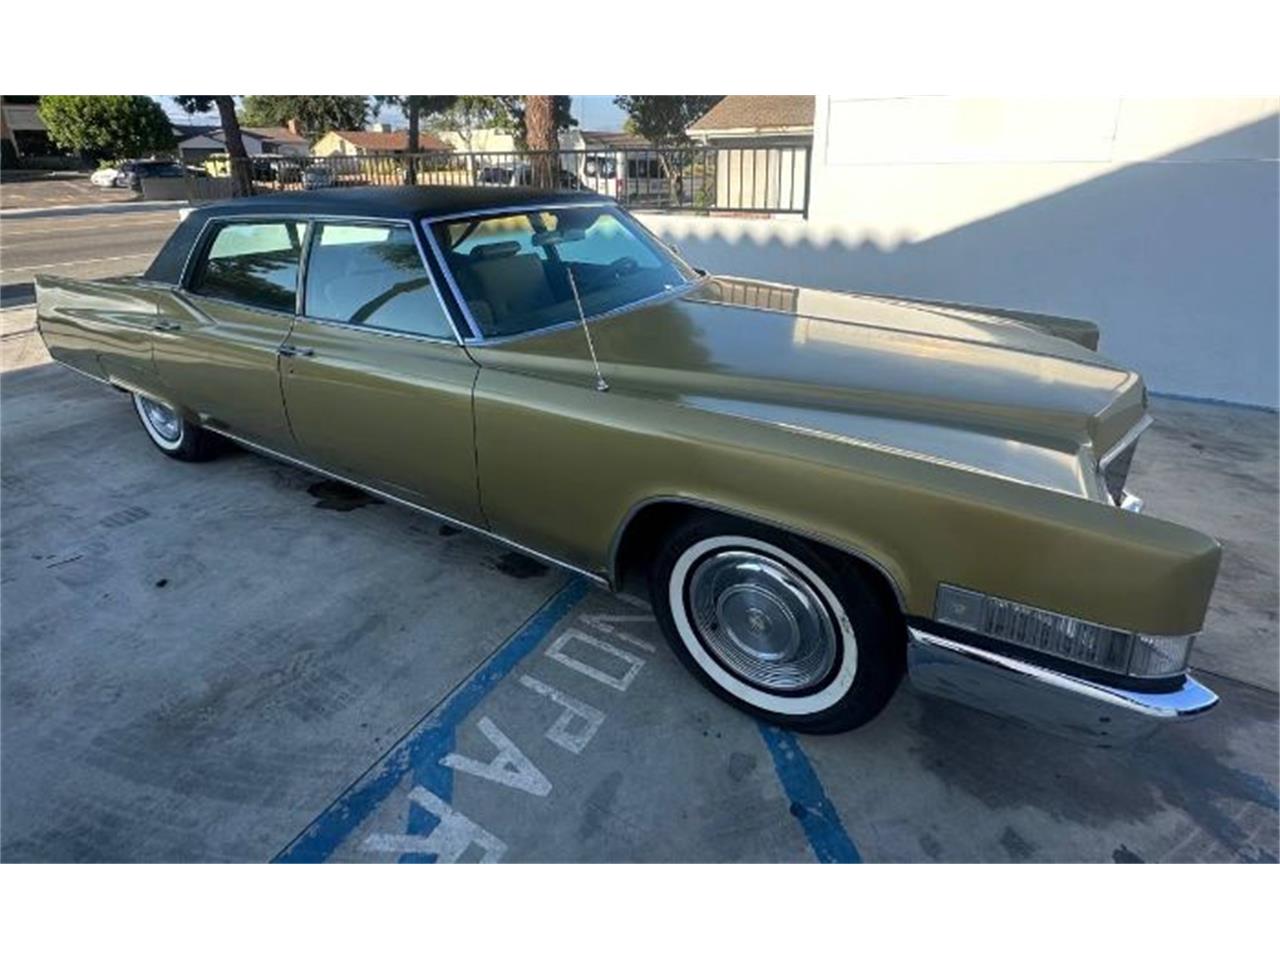 For Sale: 1969 Cadillac Flee2od in Cadillac, Michigan for sale in Cadillac, MI